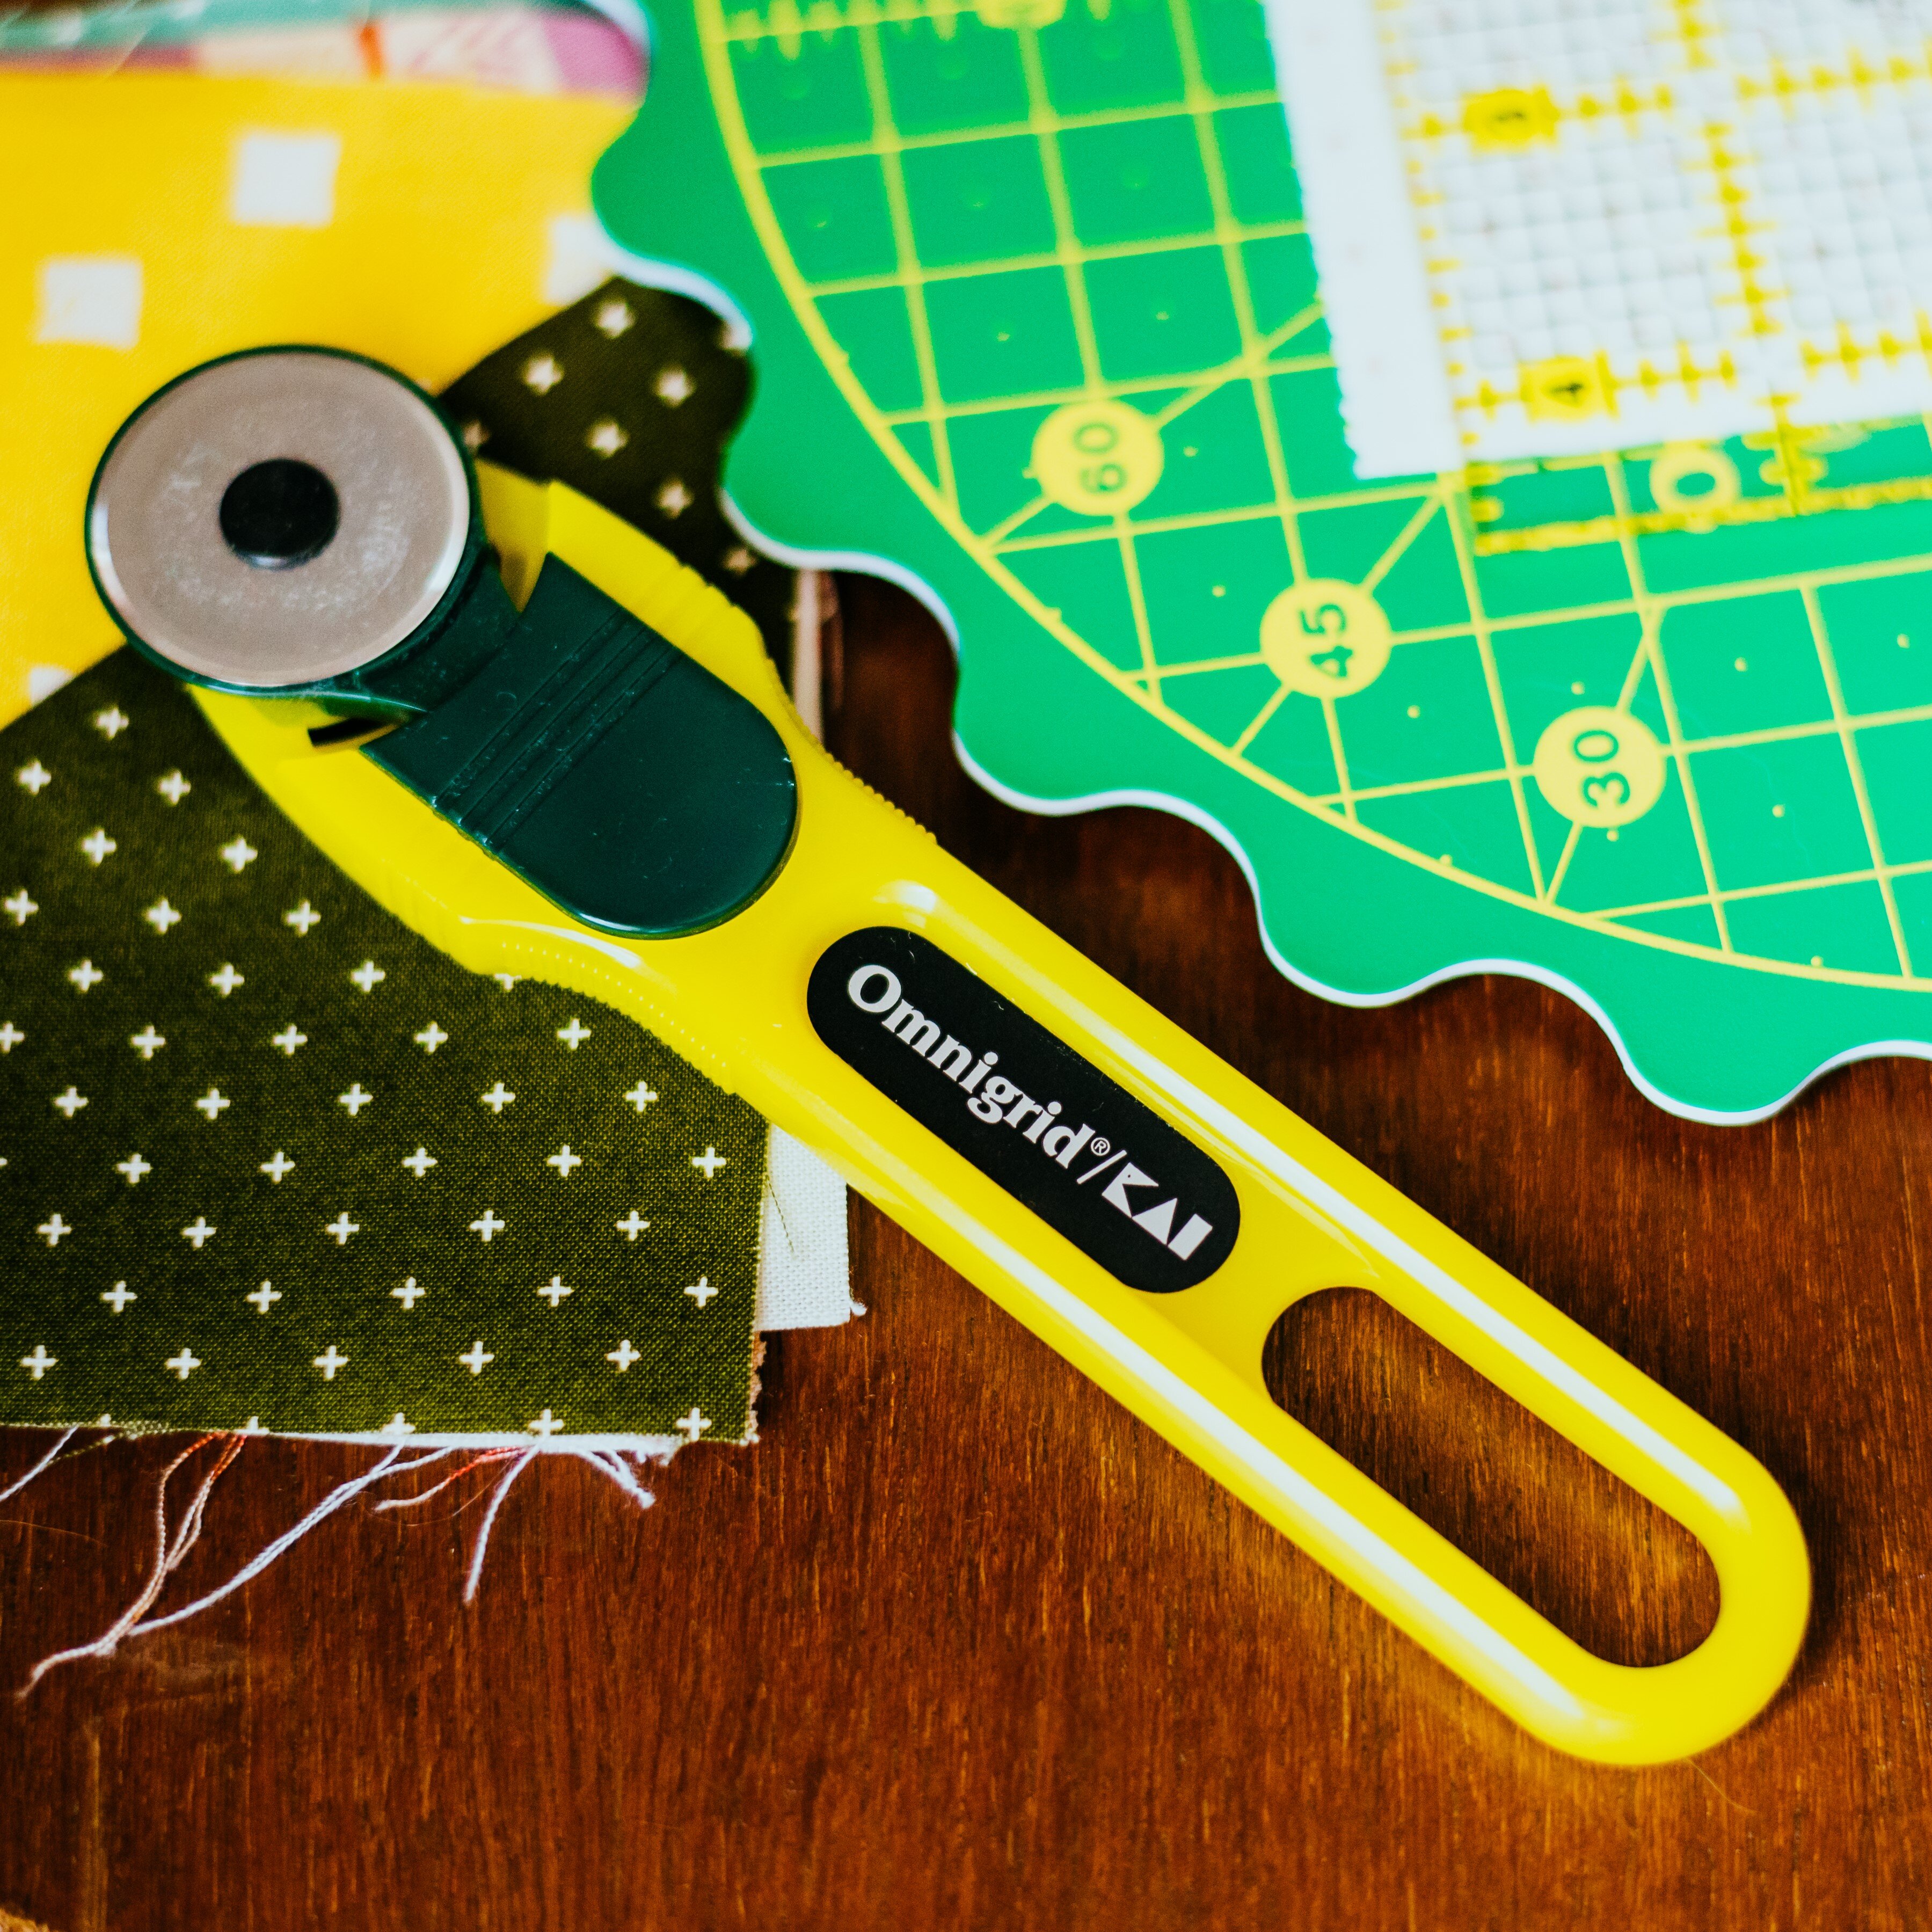 Crafts & Sewing Cutting Mats & Cutters